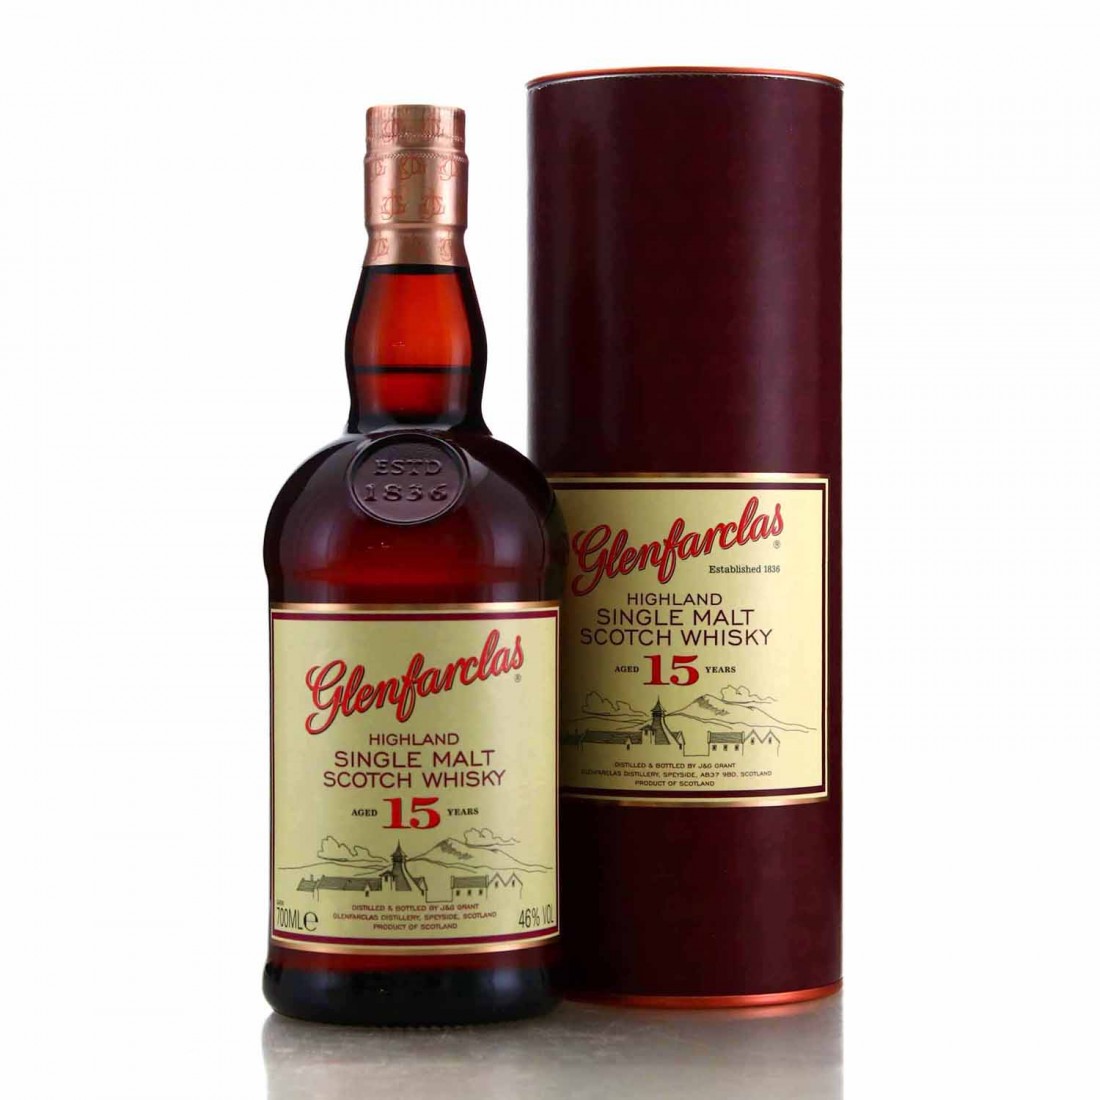 Glenfarclas 15 Years Highland Single Malt Scotch Whisky – Speyside, Scotland